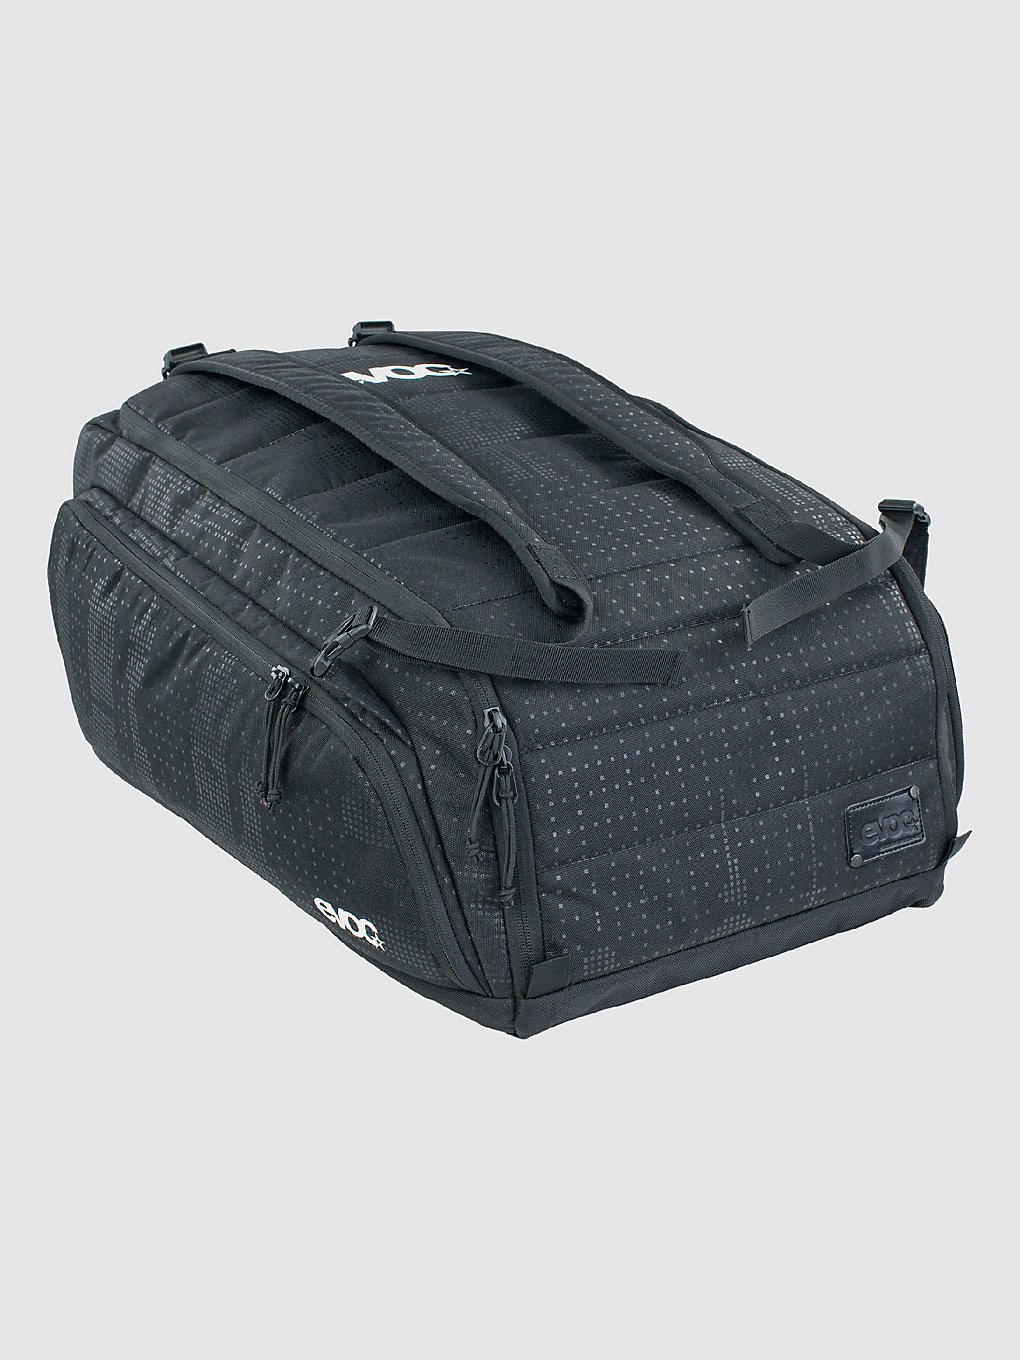 Evoc Gear 55L Bag black kaufen